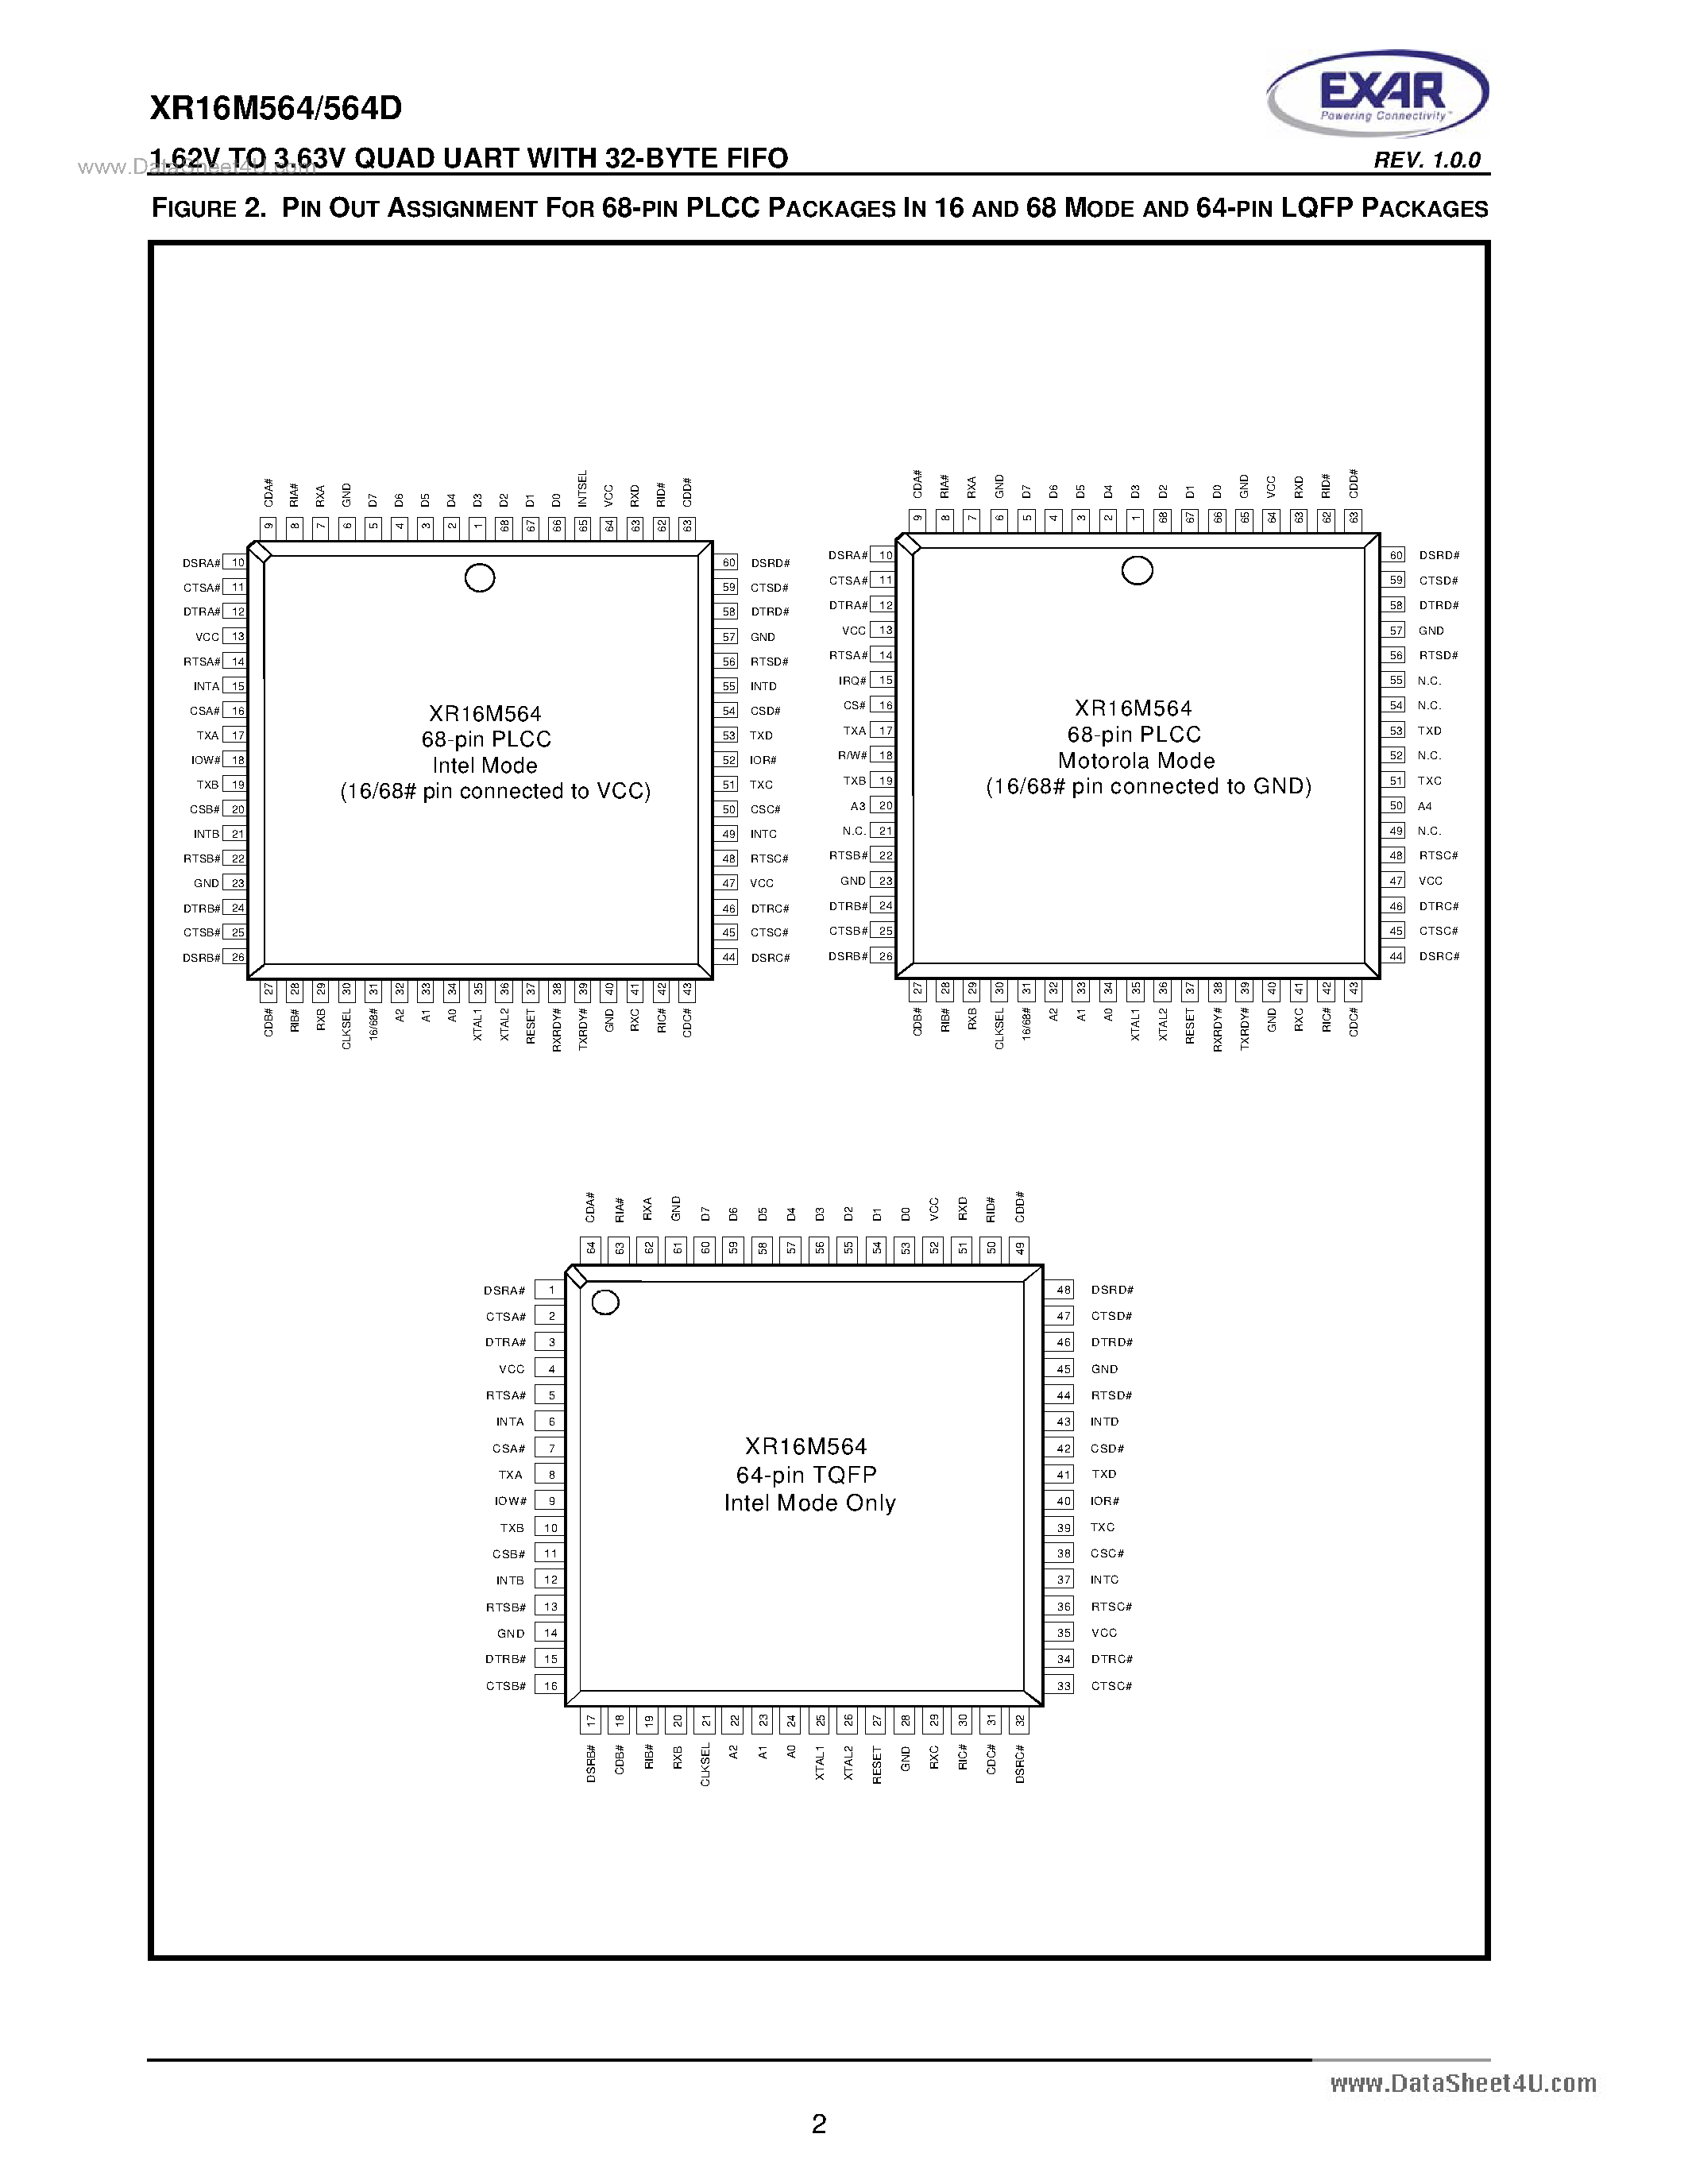 Datasheet XR16M564 - 1.62V TO 3.63V Quad UART page 2